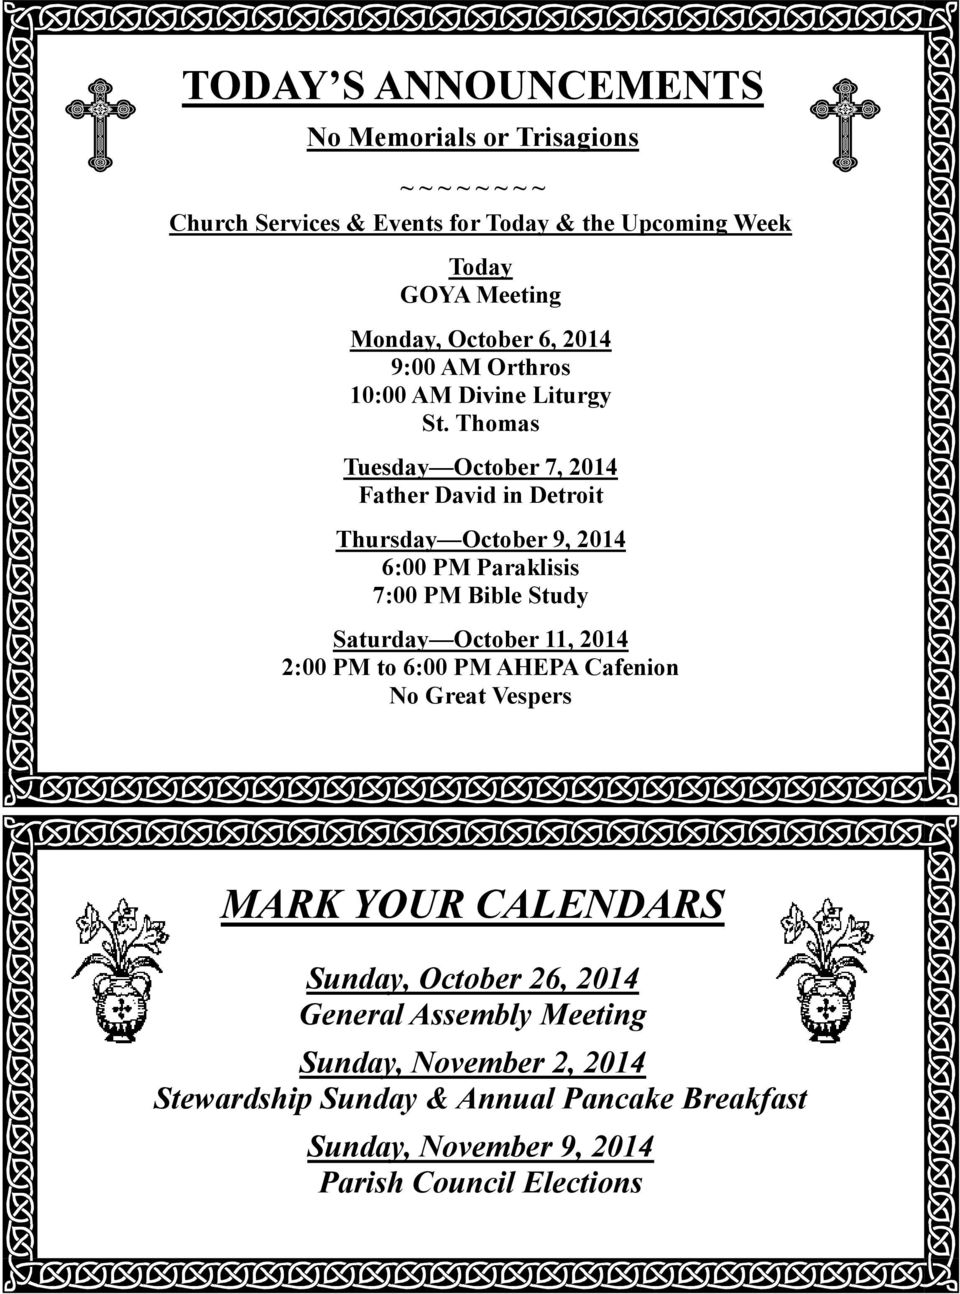 Thomas Tuesday October 7, 2014 Father David in Detroit Thursday October 9, 2014 6:00 PM Paraklisis 7:00 PM Bible Study Saturday October 11, 2014